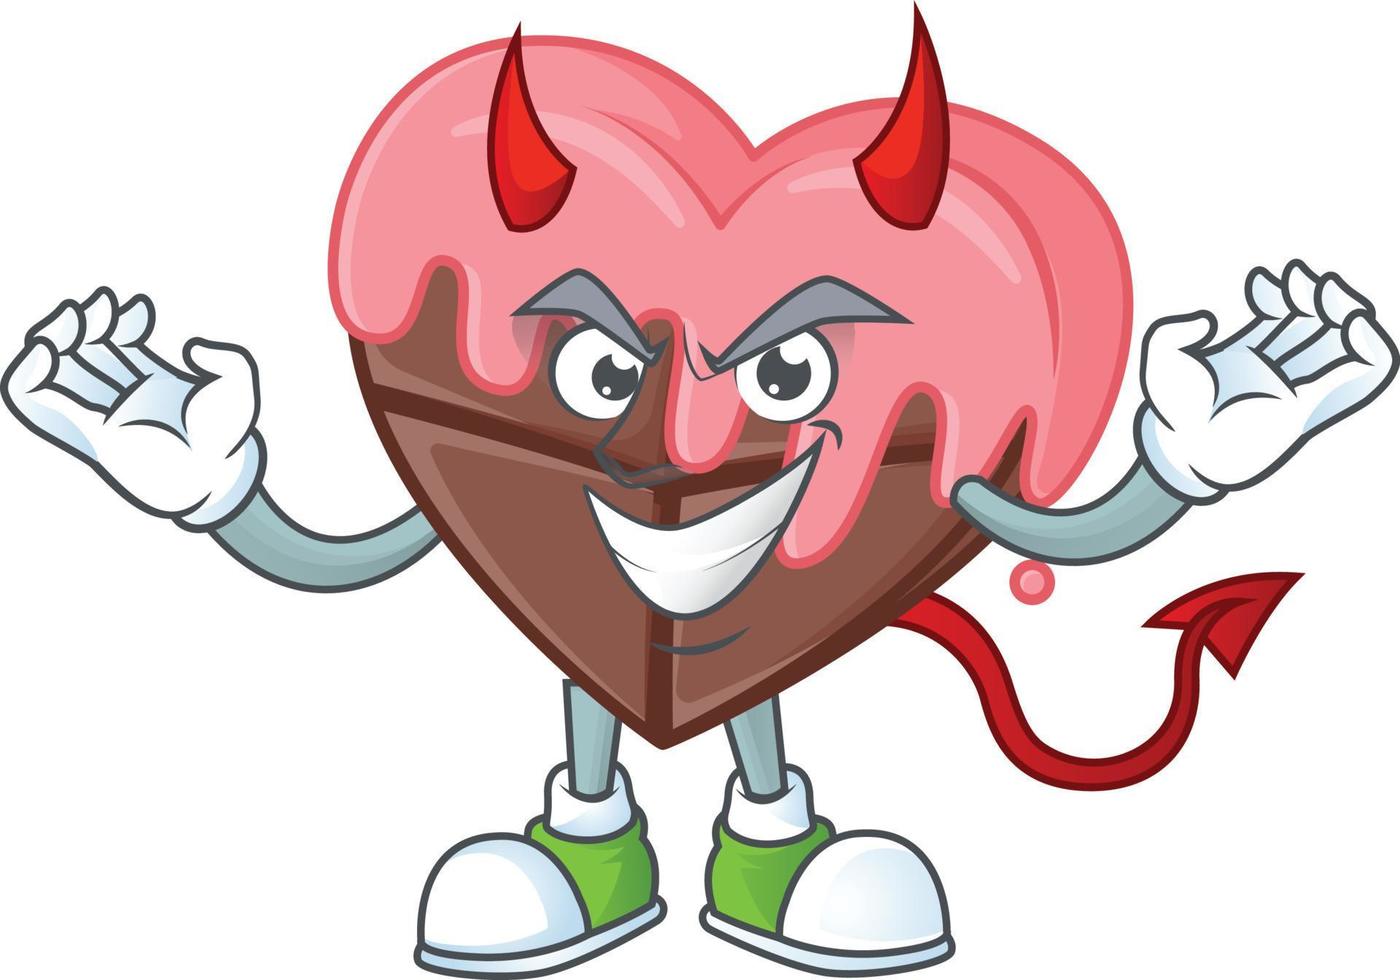 Liebe Schokolade mit Rosa Karikatur Charakter Stil vektor